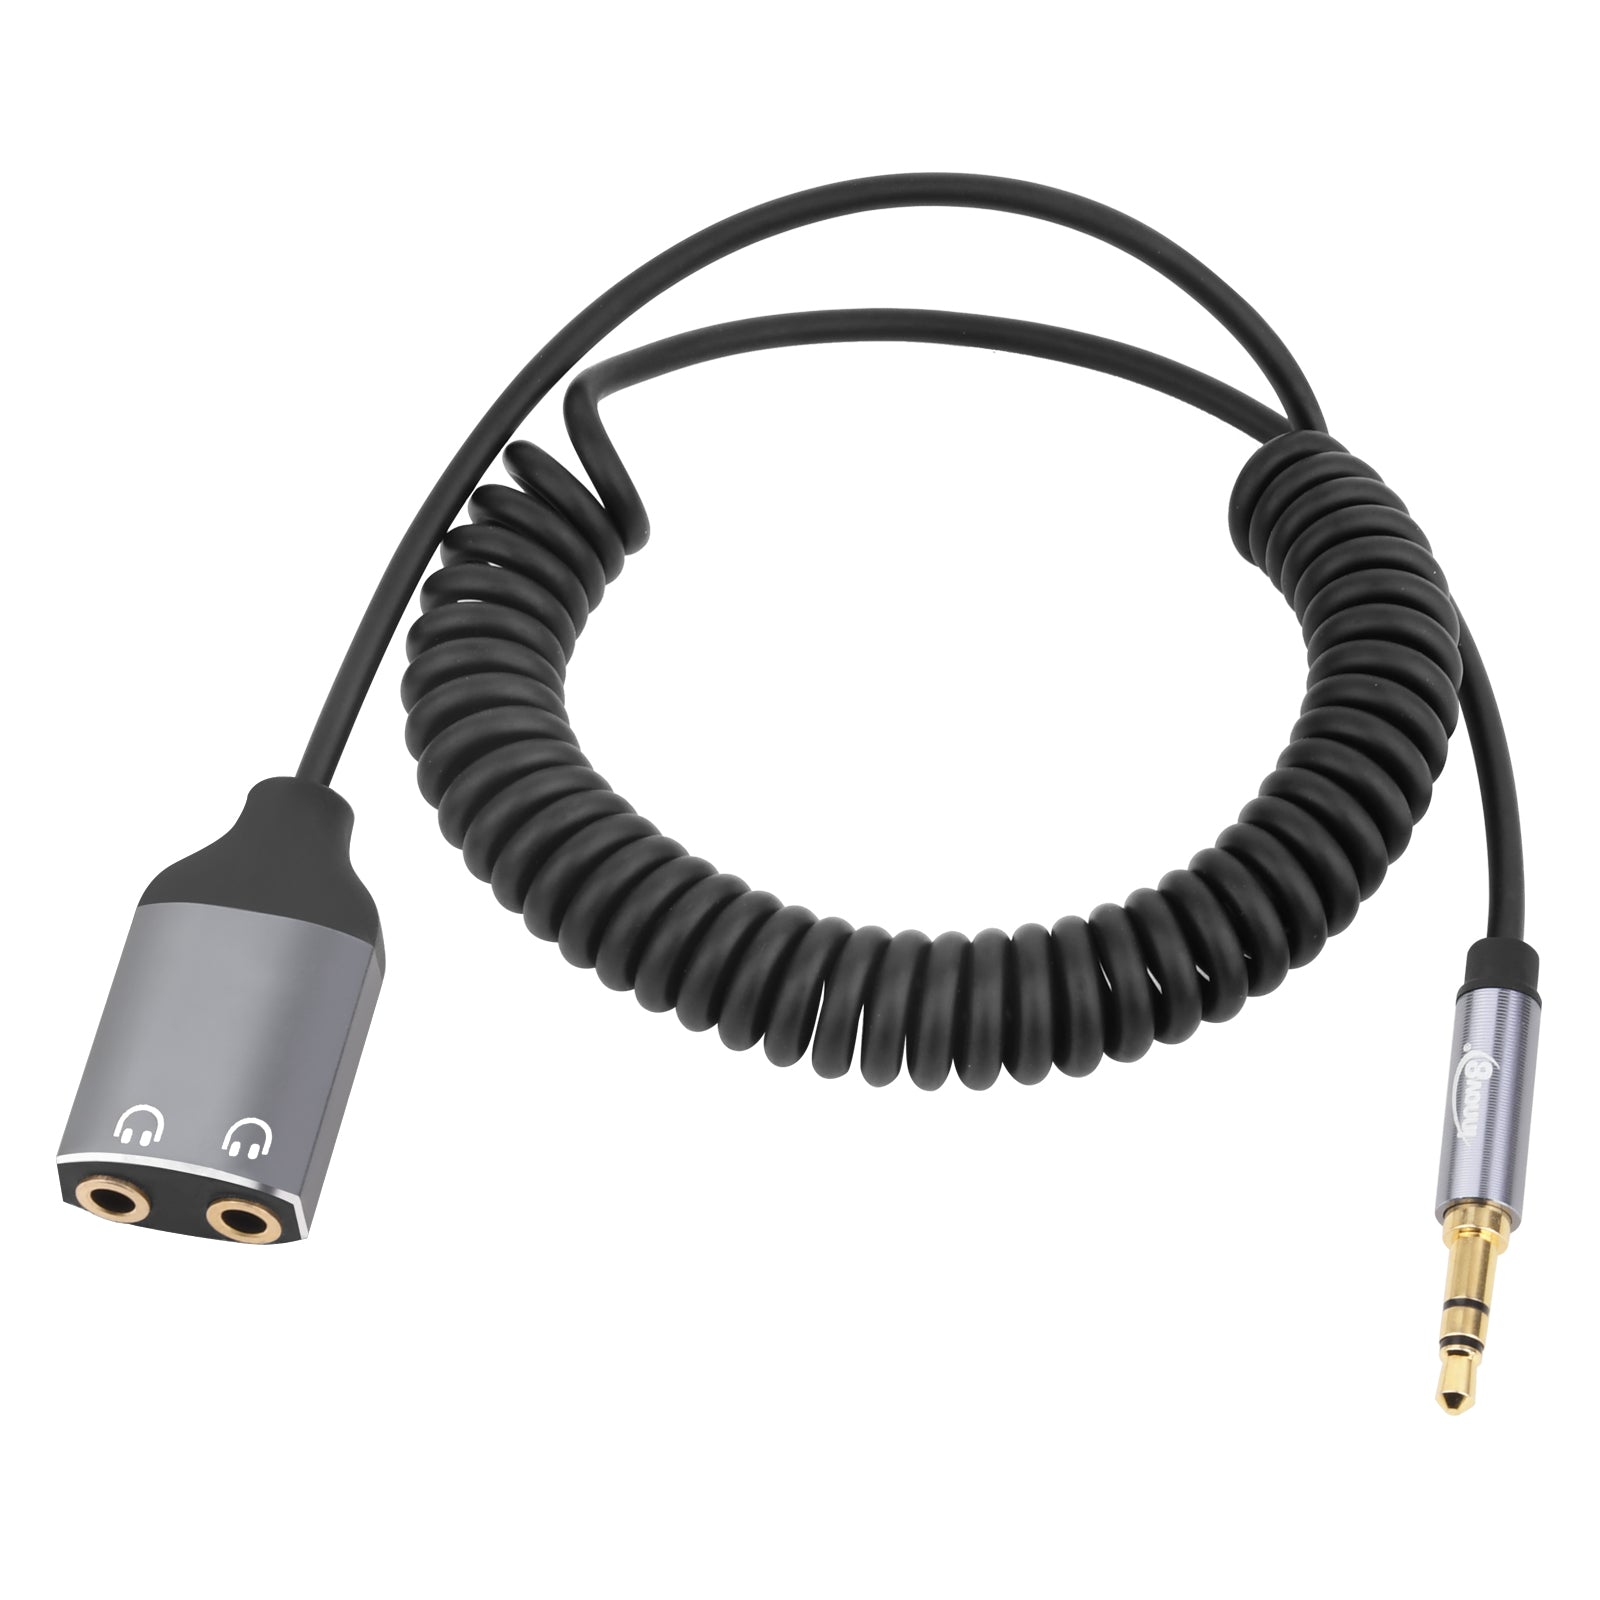 3.5mm 3-Pole to Dual 3.5mm Headphone Splitter AUX Audio Cable